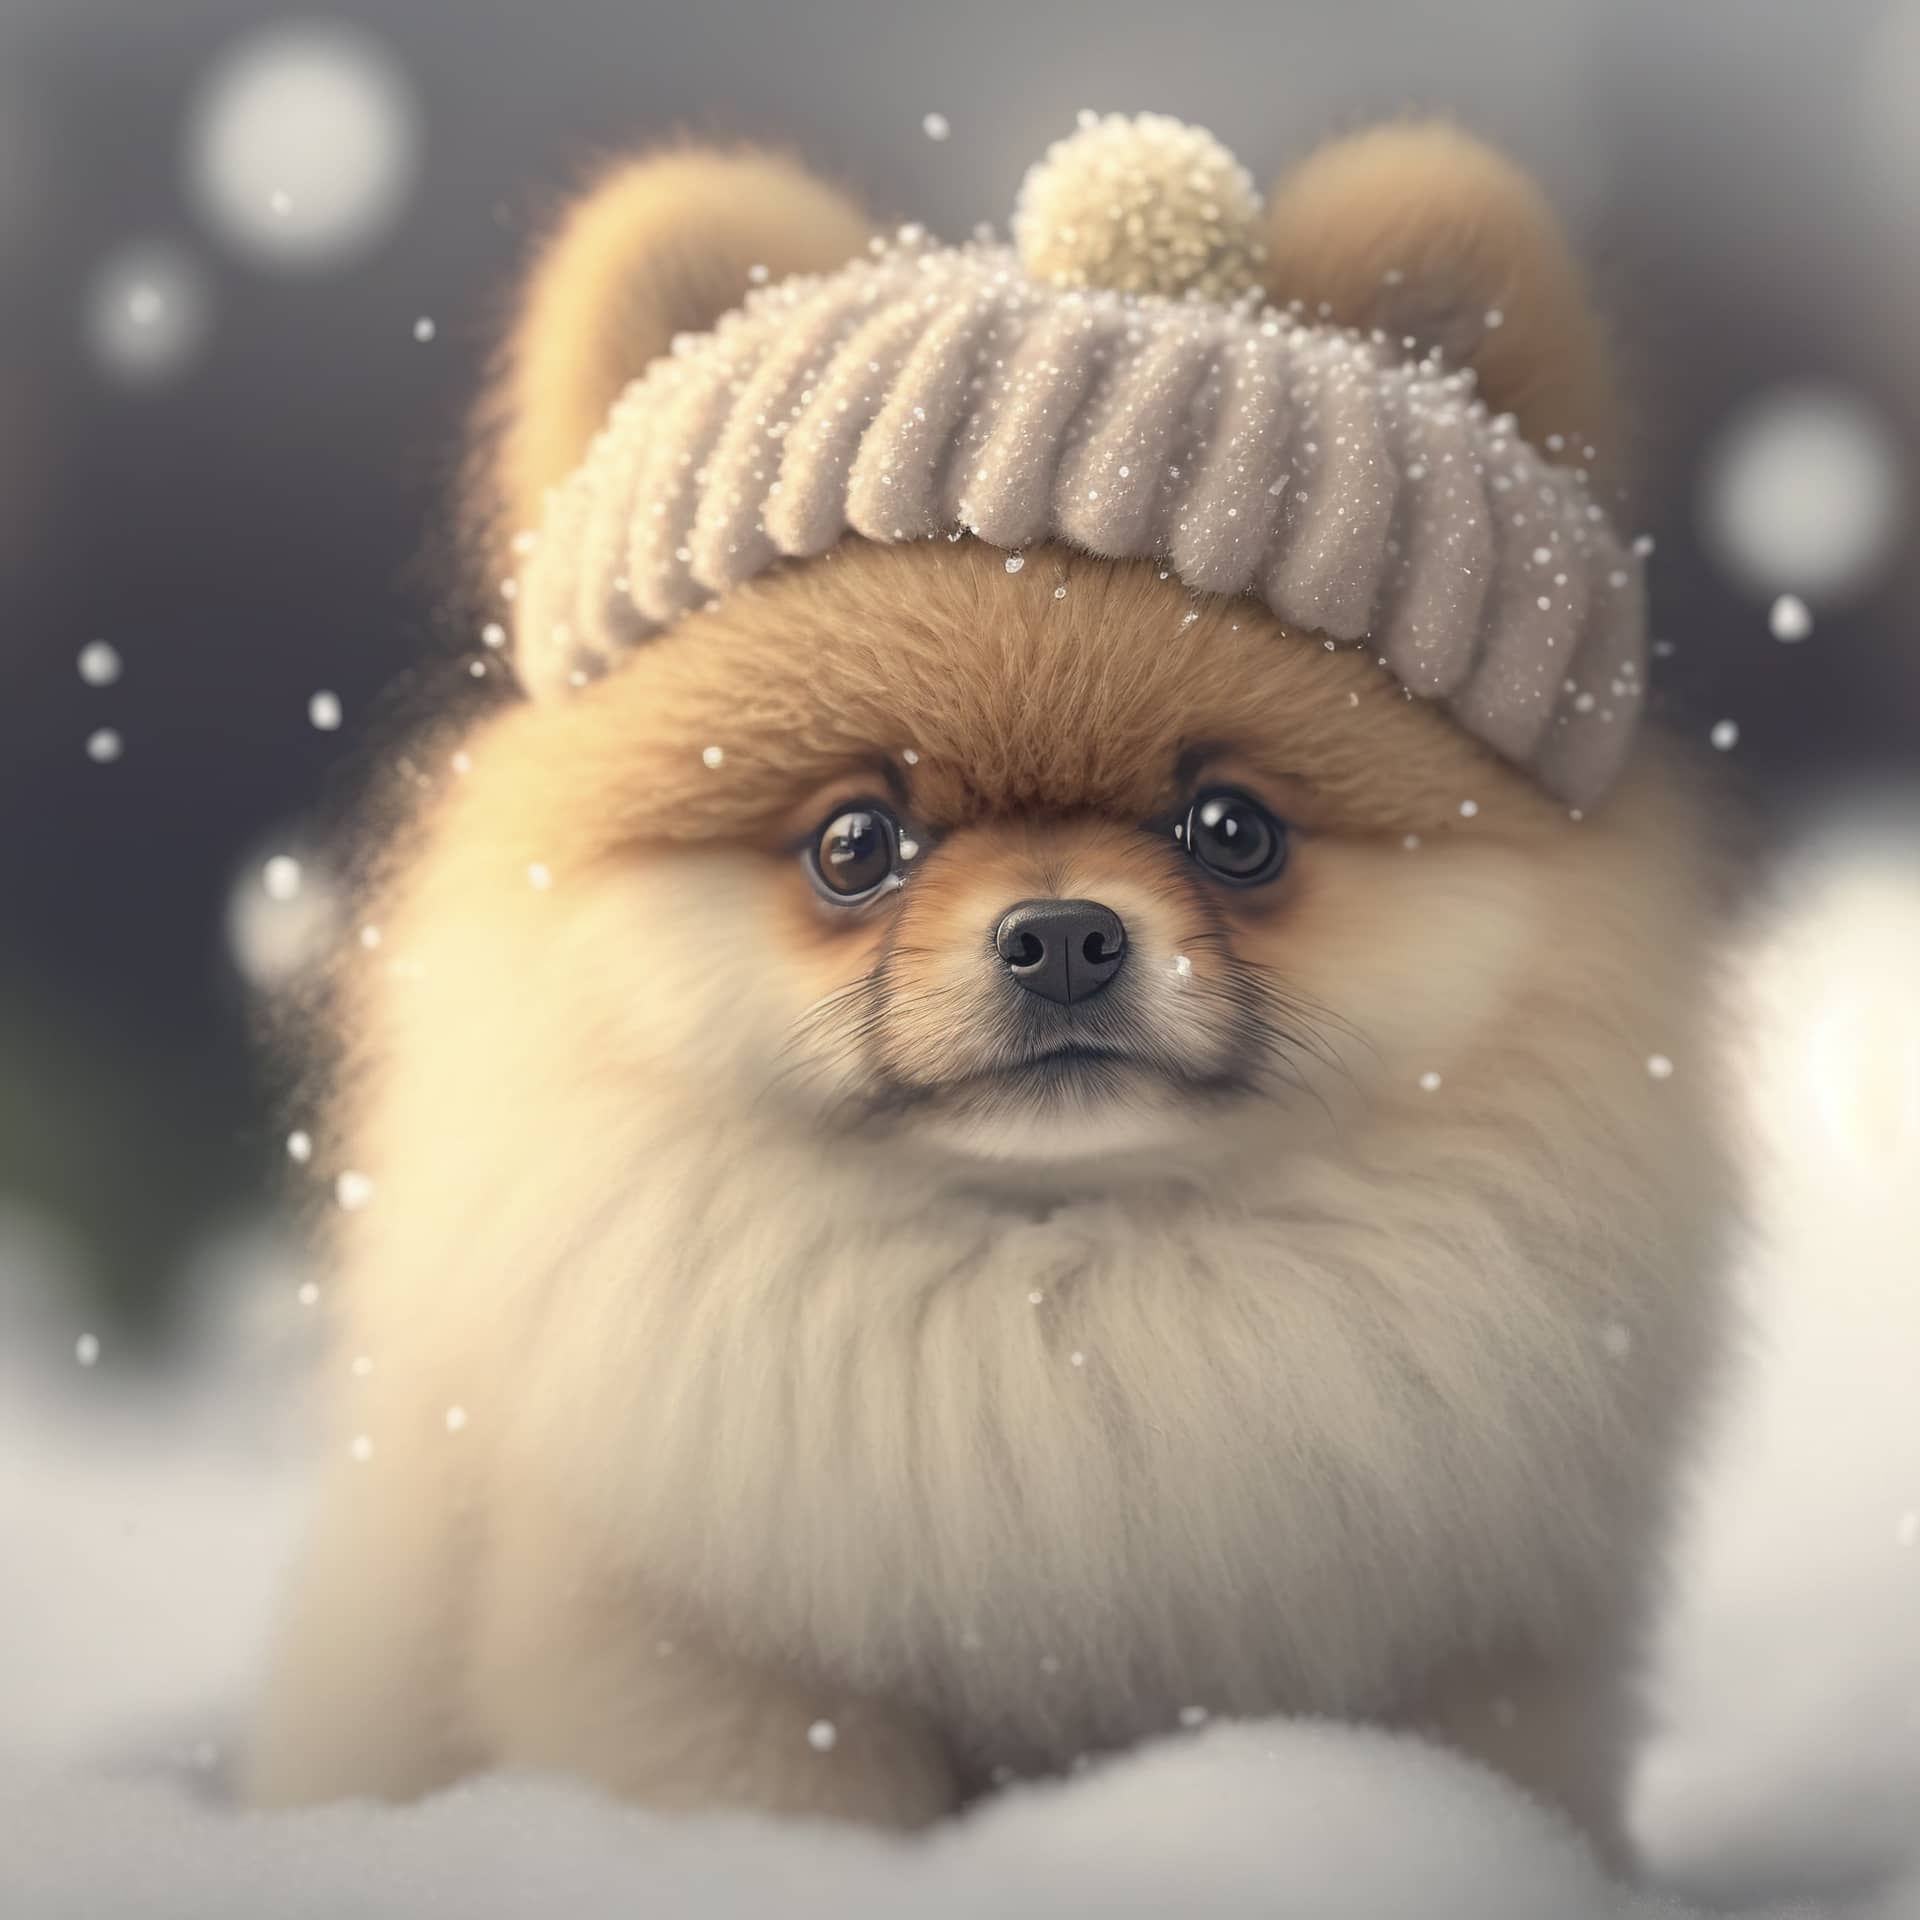 Animal profile pictures cute pomeranian dog image